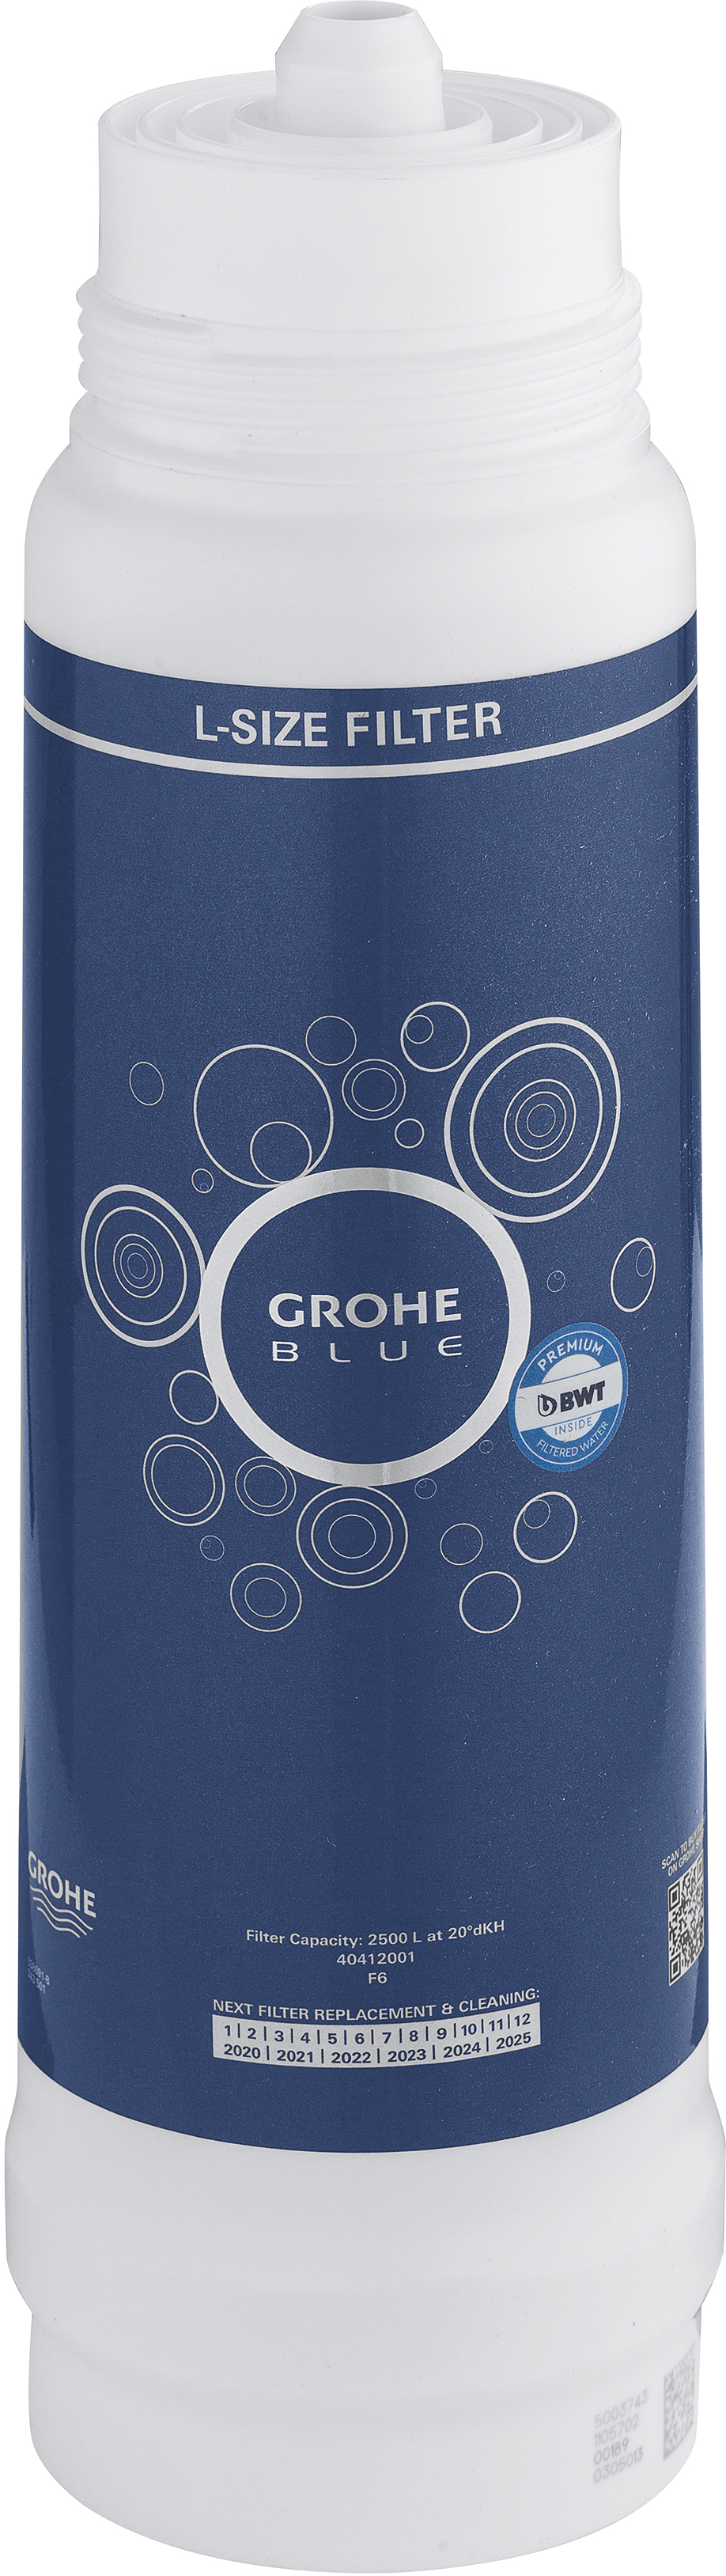 Фильтр Grohe Blue 40412001 L-Size, без насадки